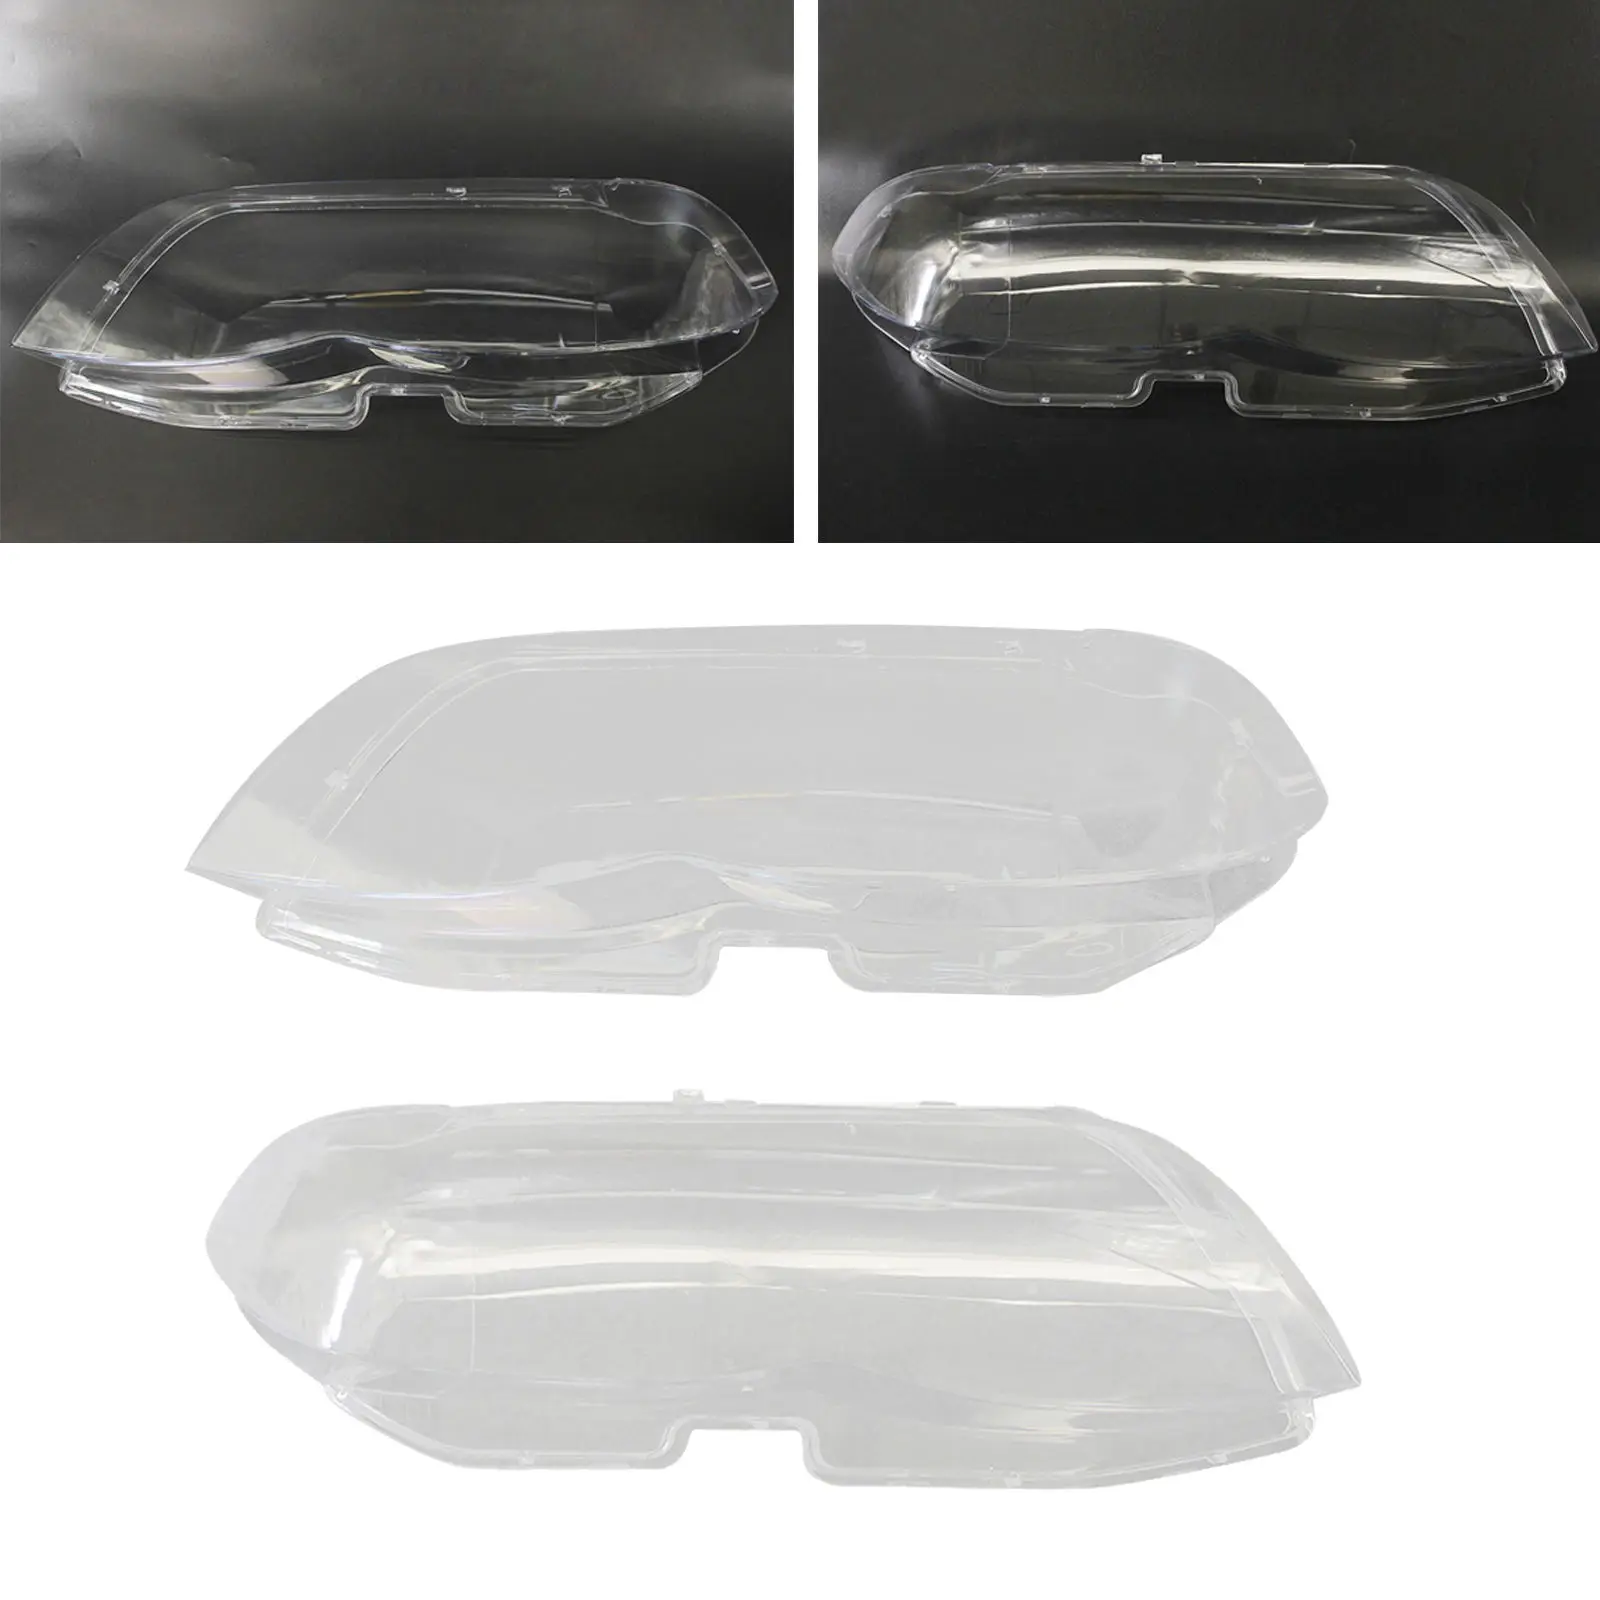 Headlight Lens Cover, Car Headlight Headlamp Lense Clear Lens Cover Replacemnt for  X5 E53 4.4 4.6 4.8 2004-2006